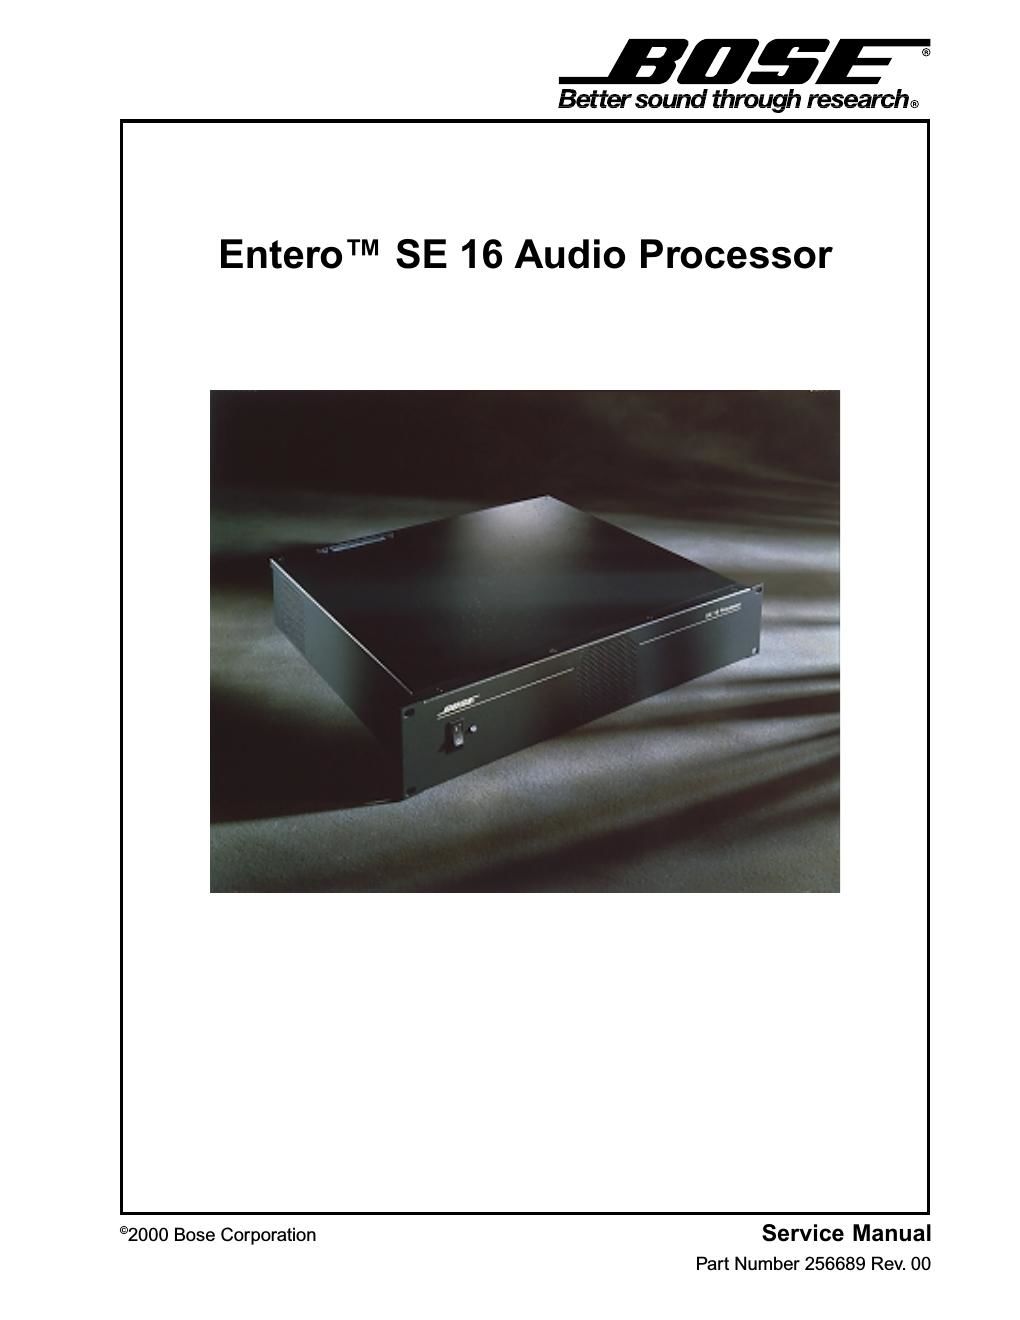 bose entero se 16 audio processor service manual